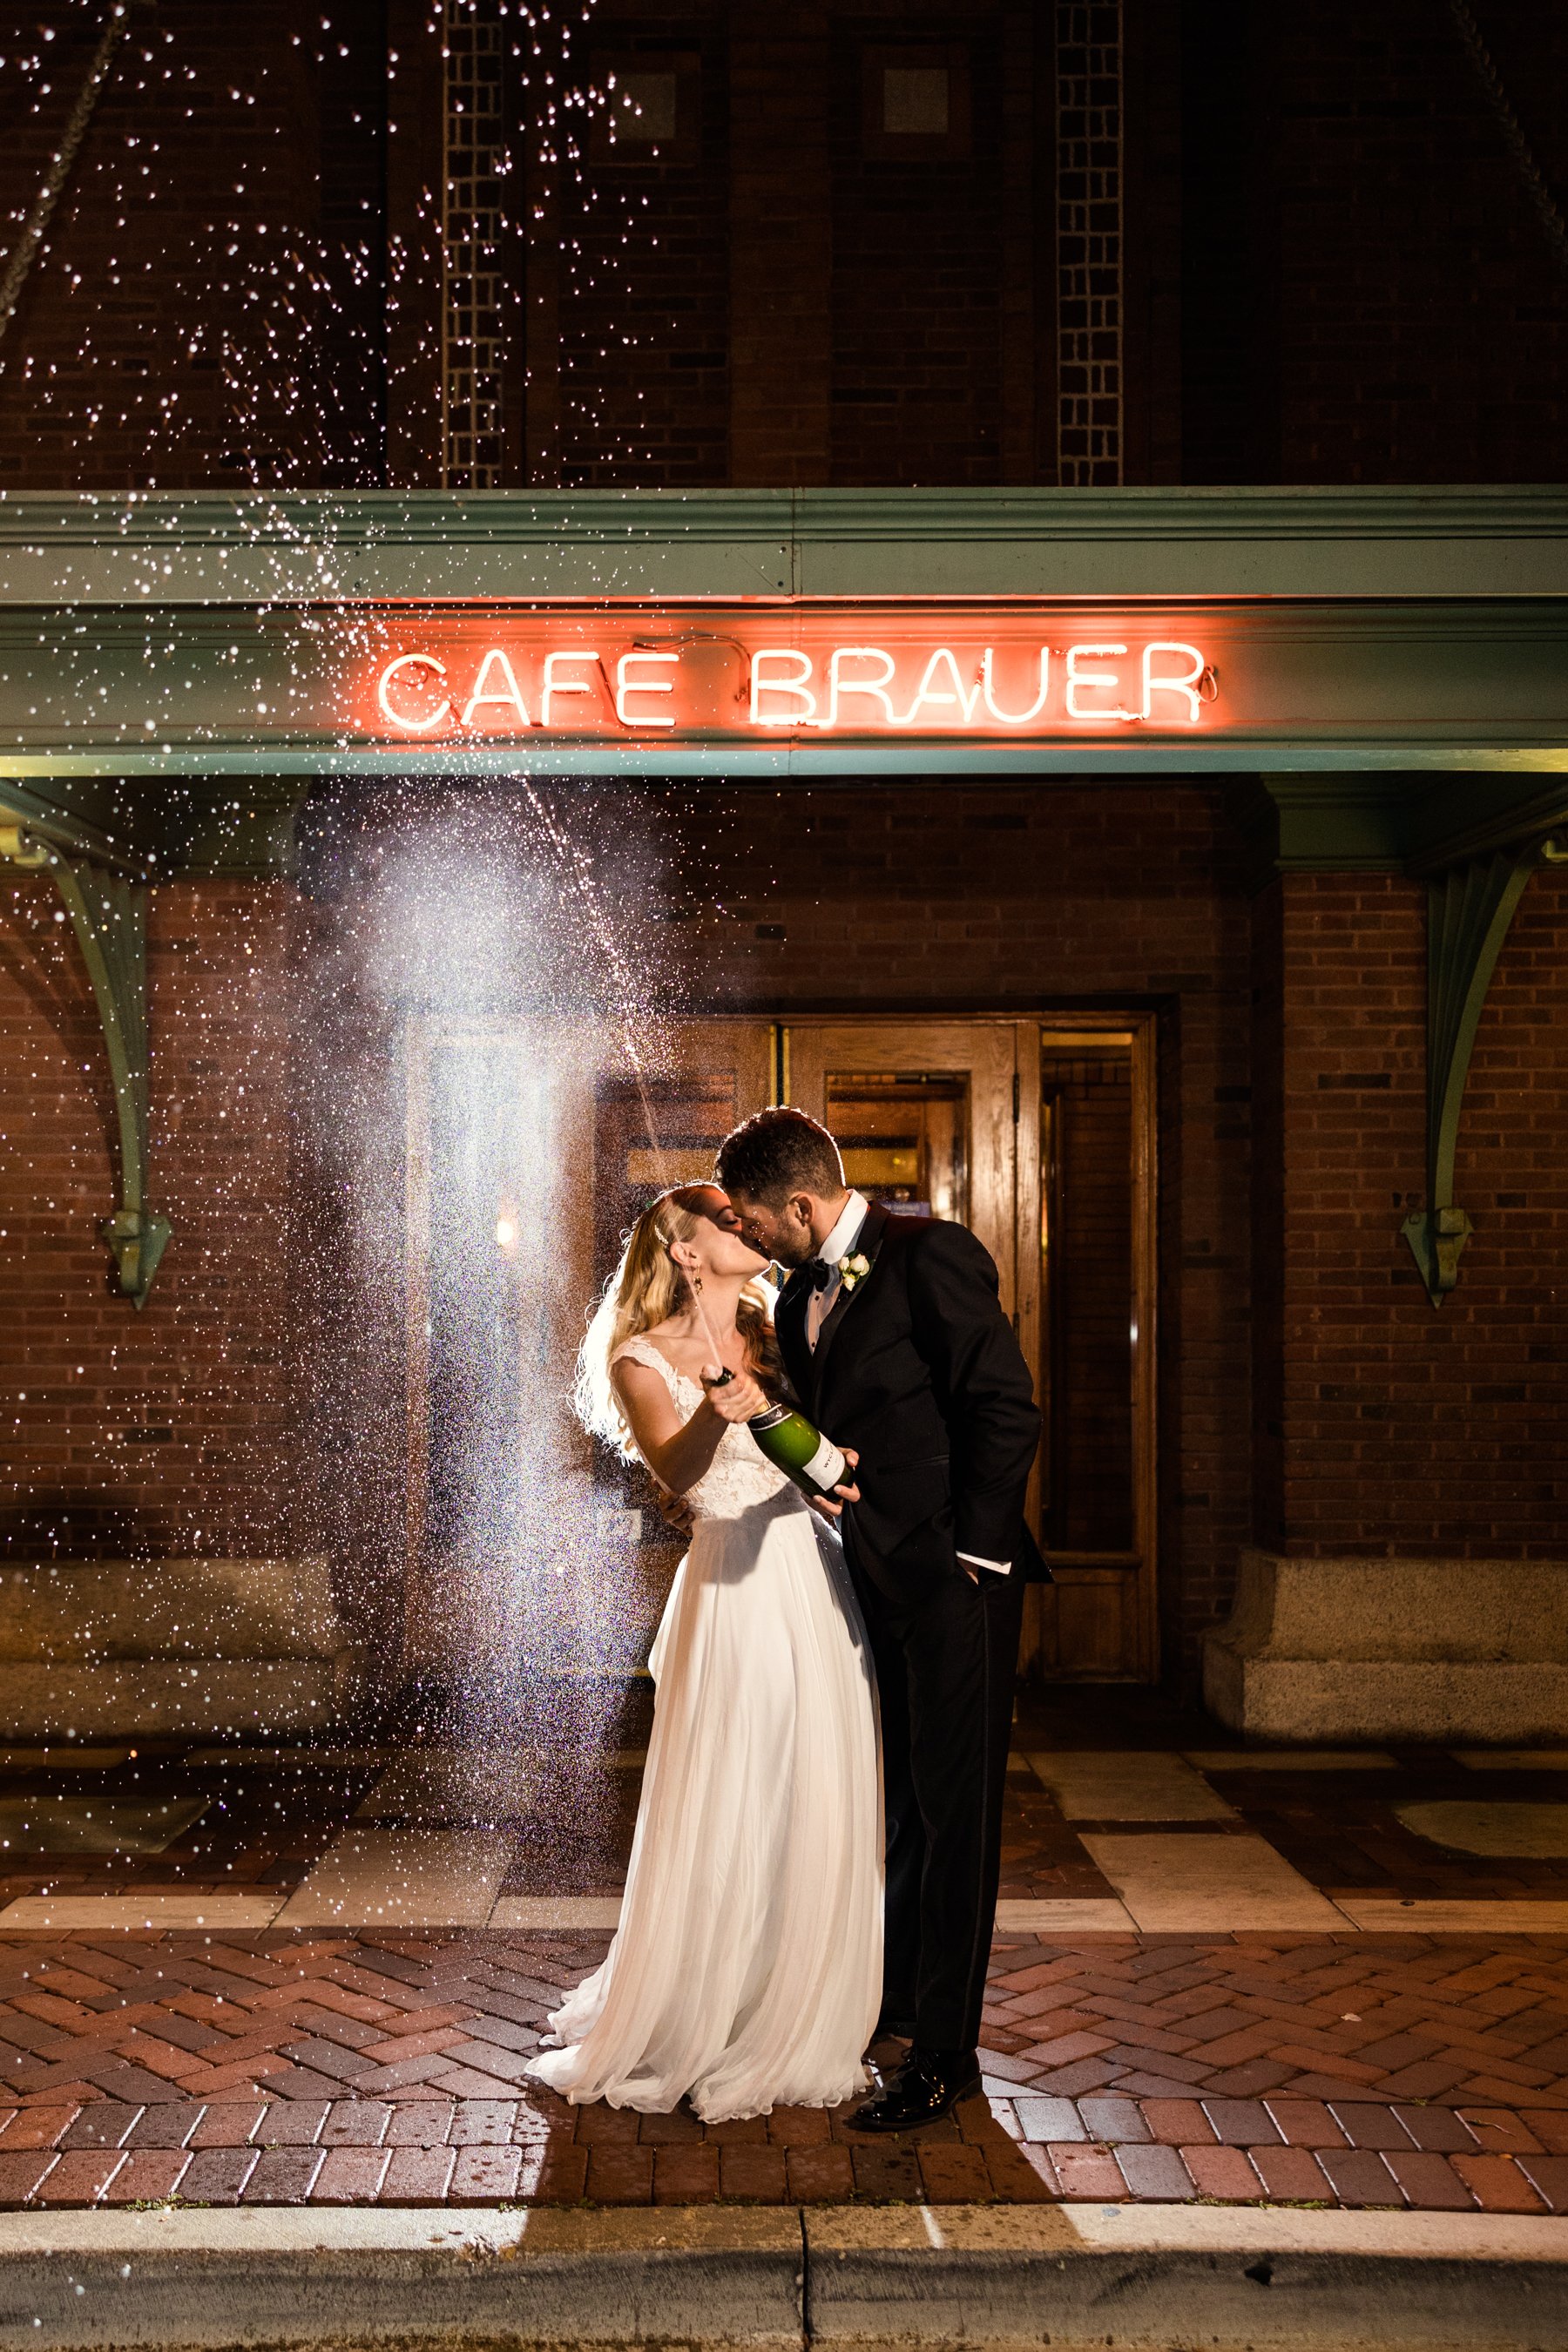 Cafe-Brauer-wedding-by-Emma-Mullins-Photography-135.jpg